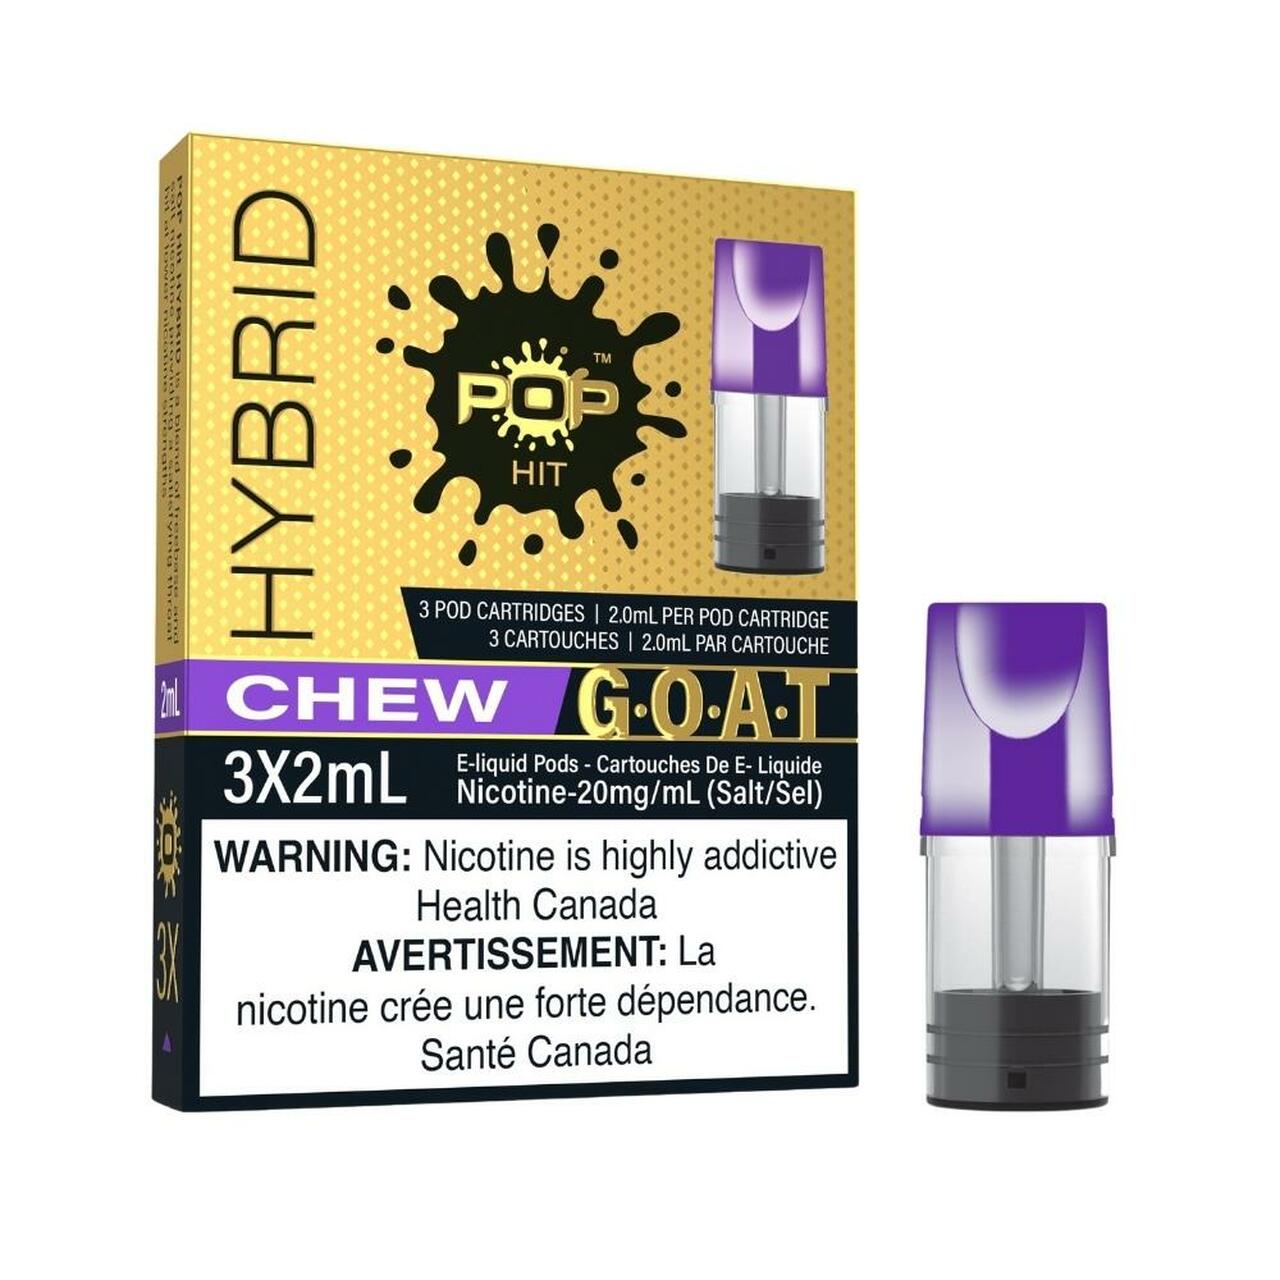 Chew (GOAT) - Pop Hit Hybrid - 20mg - 5pc/Carton - EXCISED